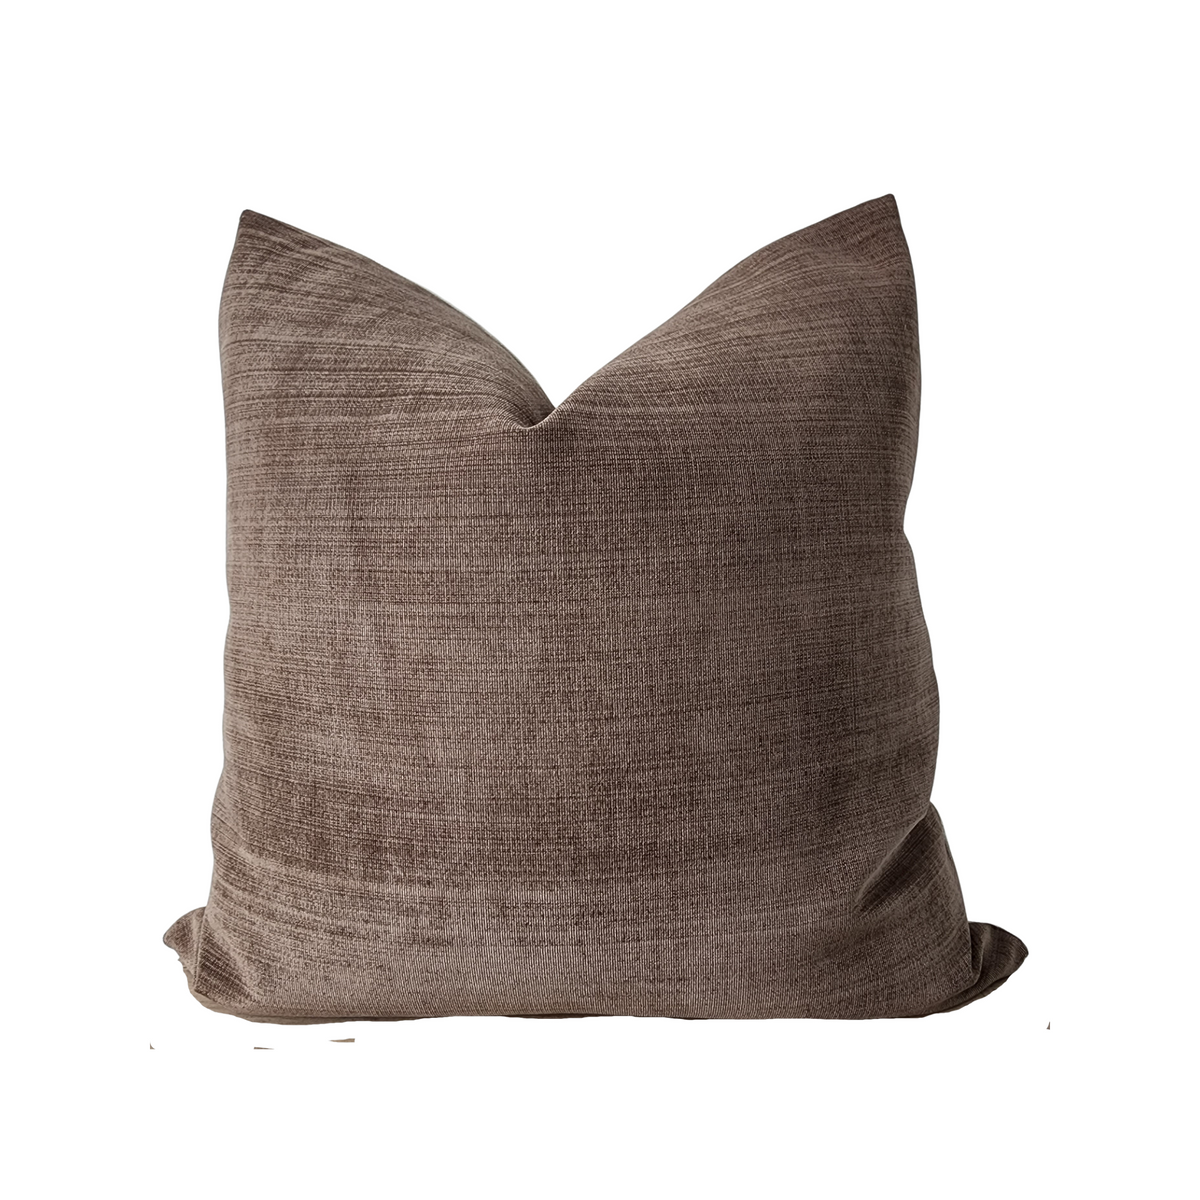 “Victoria” Vintage Crushed Velvet Throw Pillow